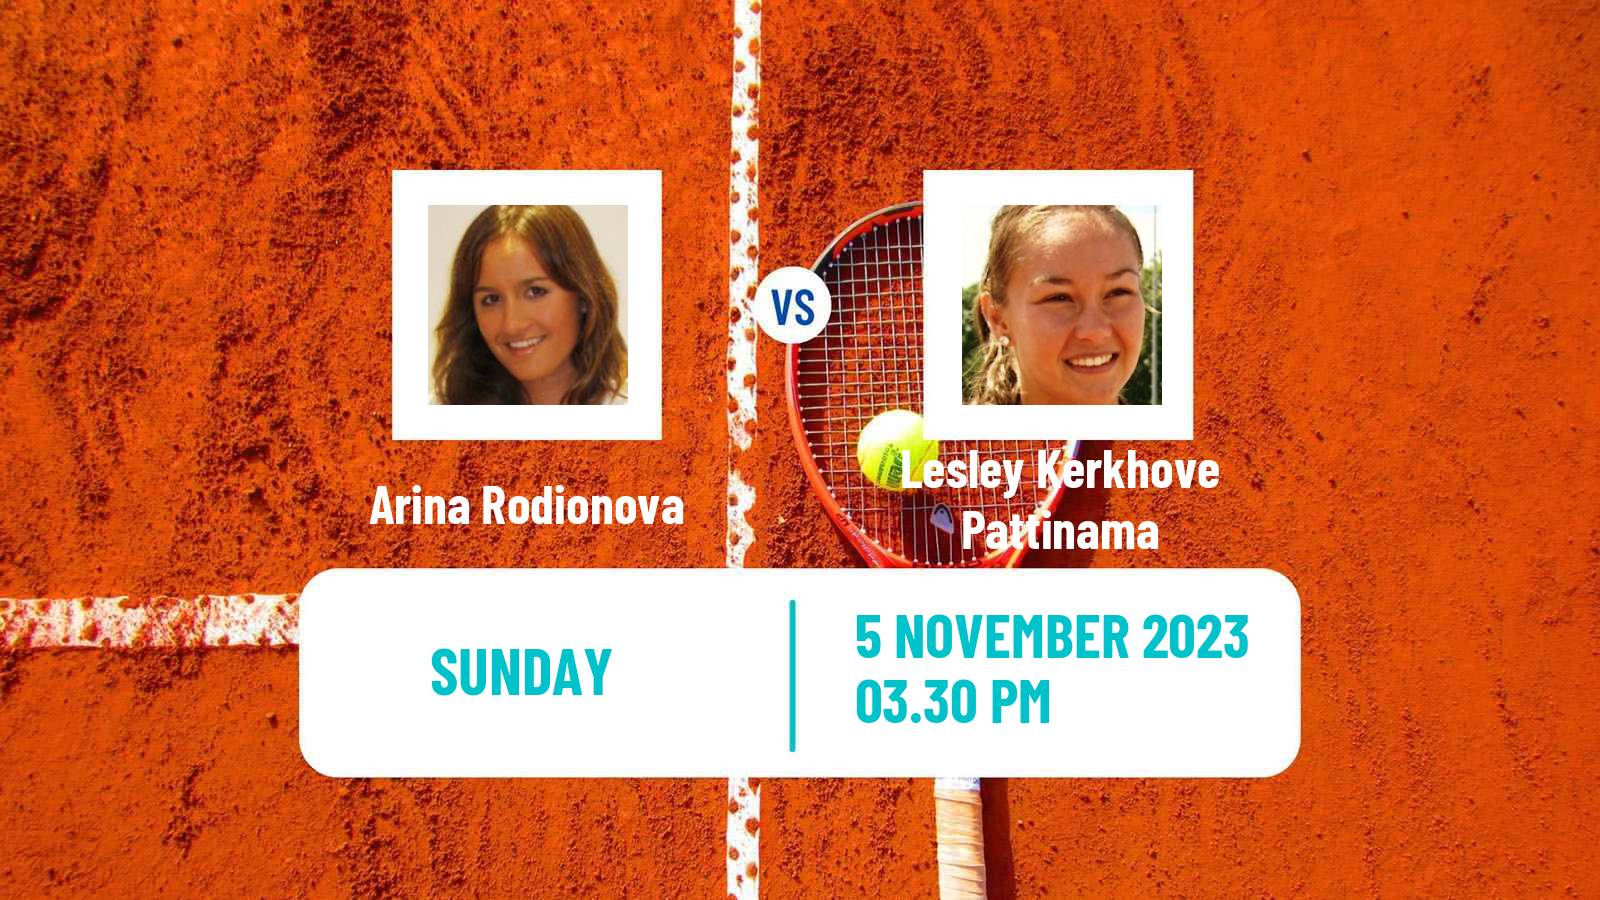 Tennis ITF W25 Edmonton Women Arina Rodionova - Lesley Kerkhove Pattinama